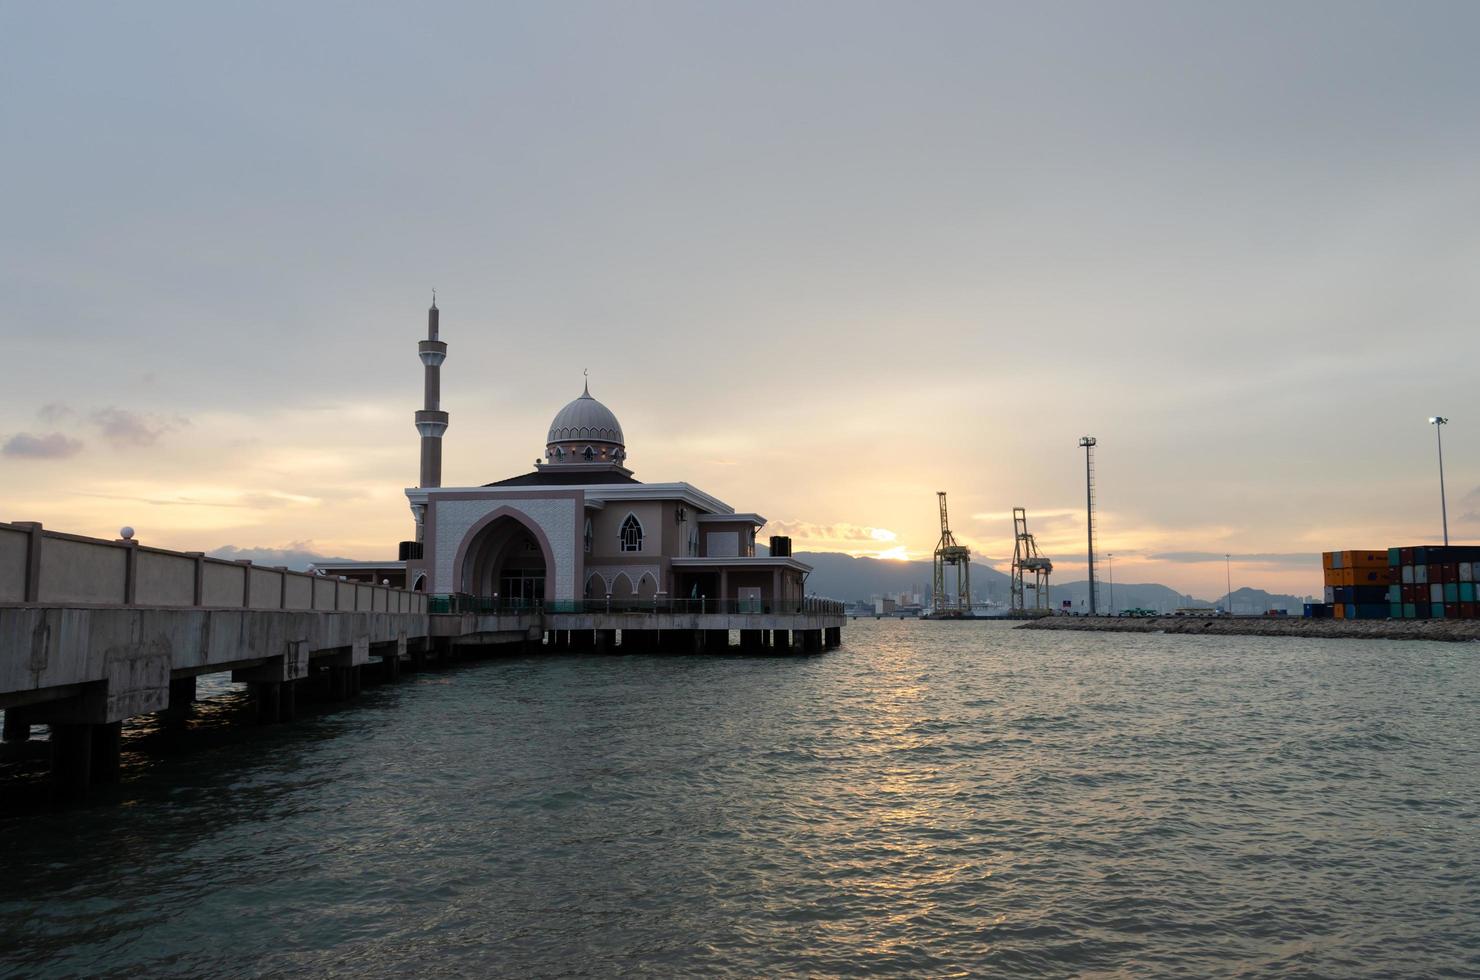 penang haven drijvende moskee in zonsondergang. foto